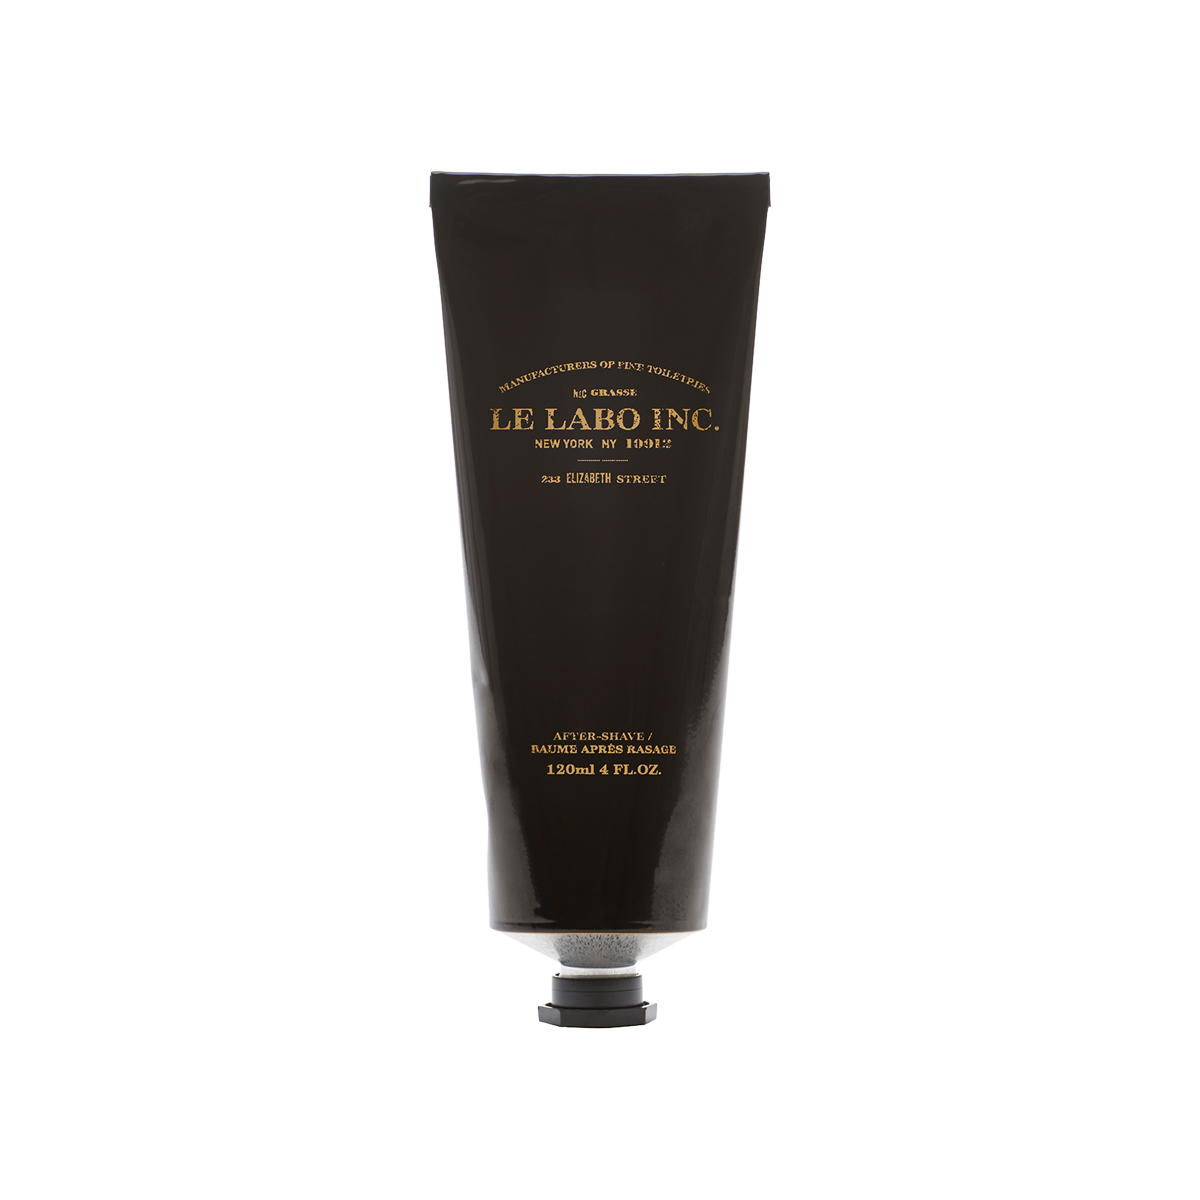 Le Labo fragrances - After Shave Balm